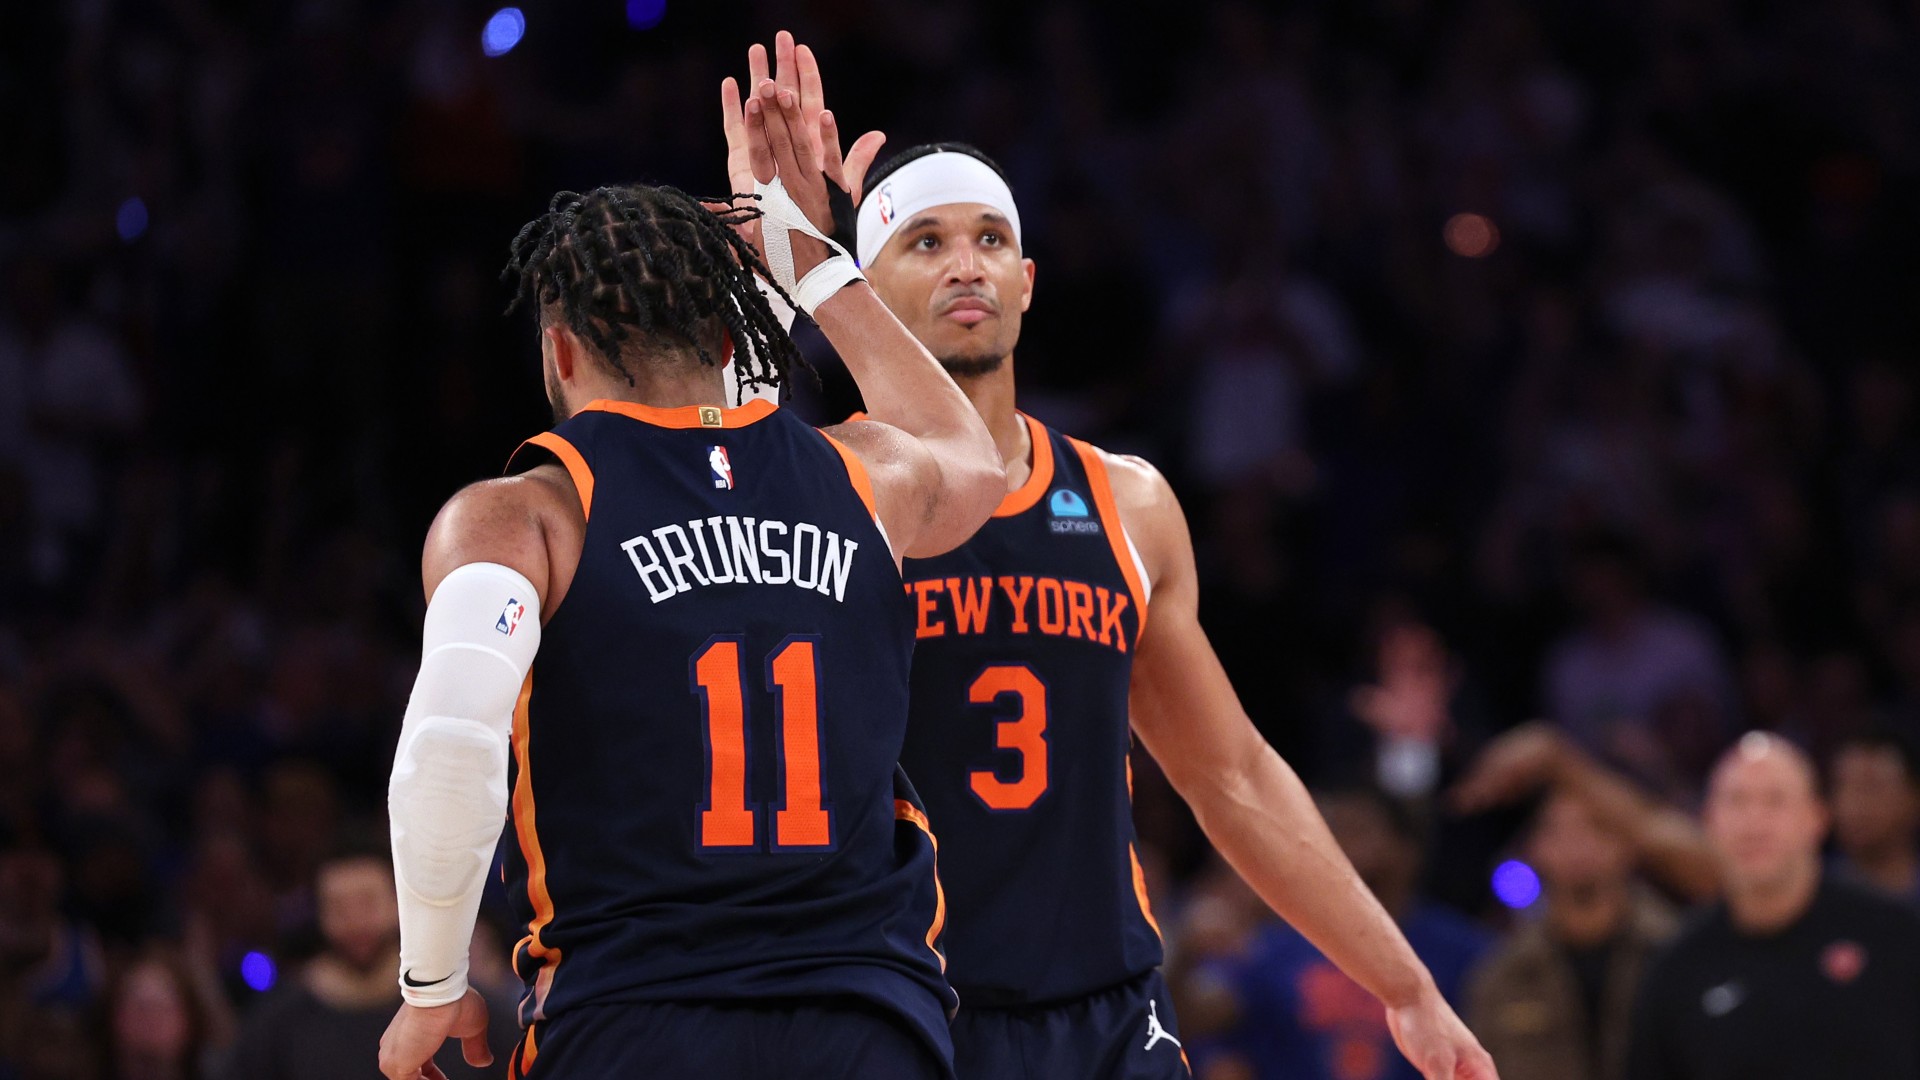 Ailing Brunson lifts Knicks